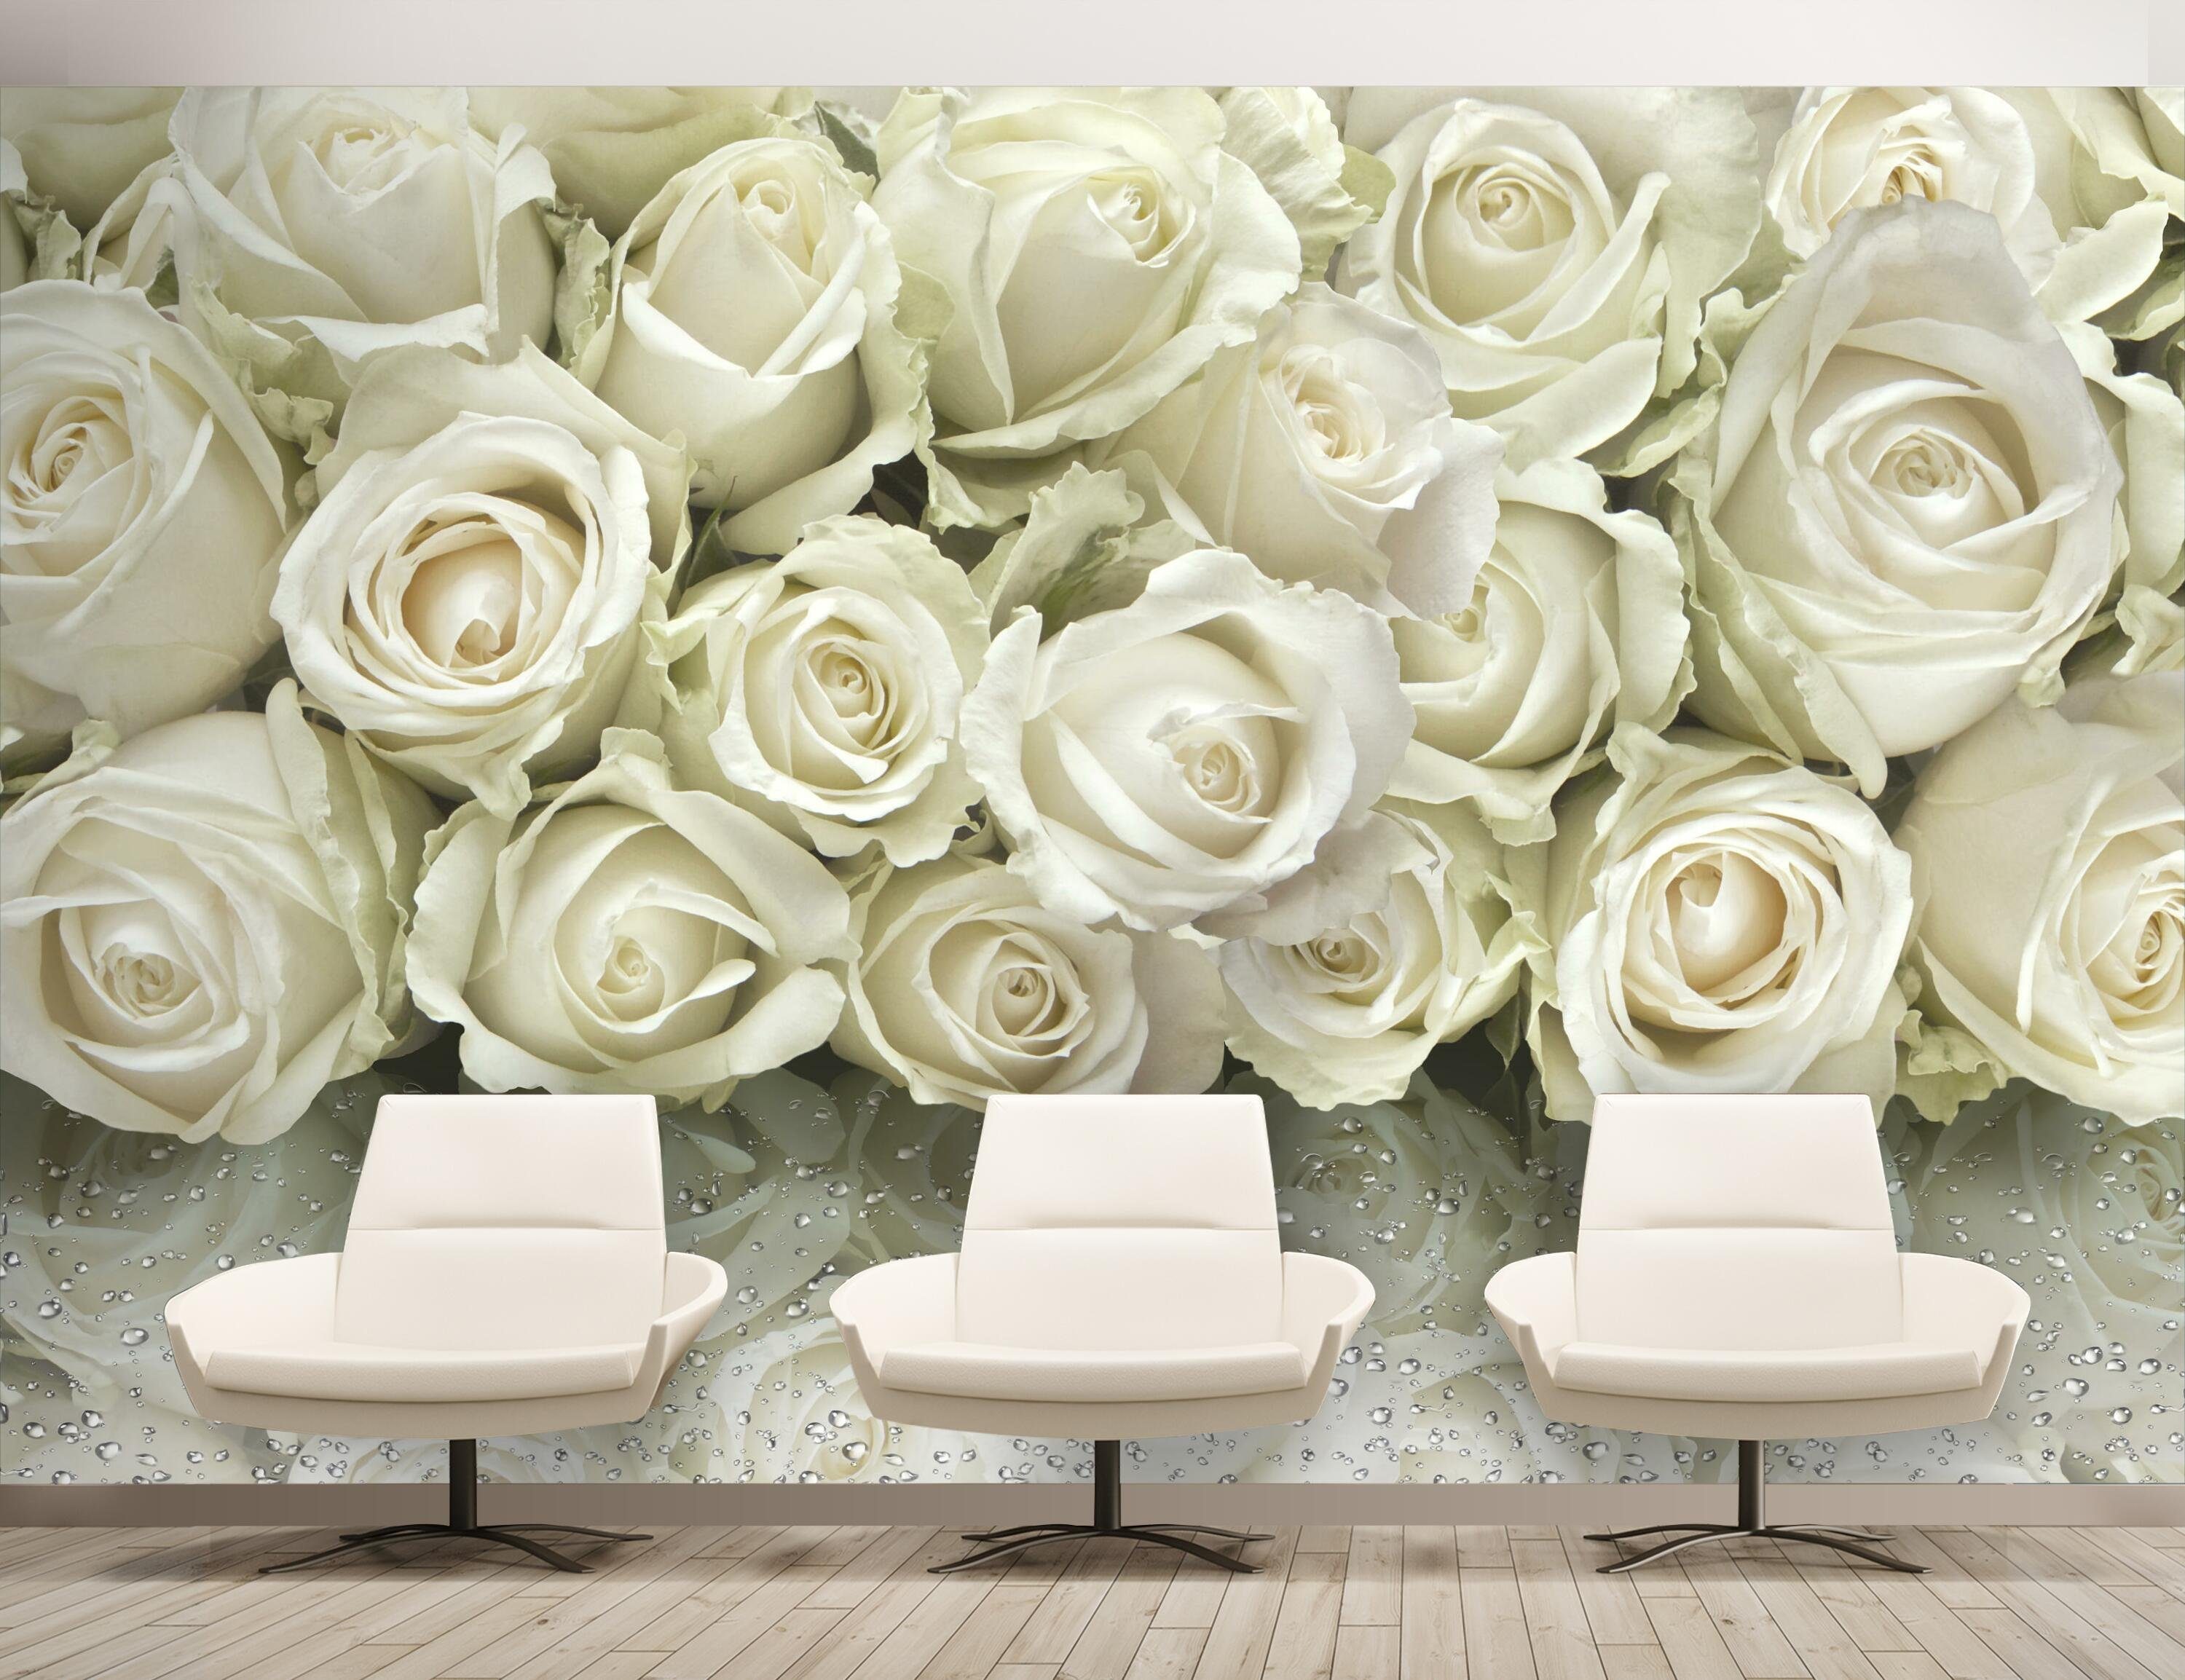 wandmotiv24 Fototapete weiße Rosenblüten, glatt, Vliestapete matt, Wandtapete, Motivtapete